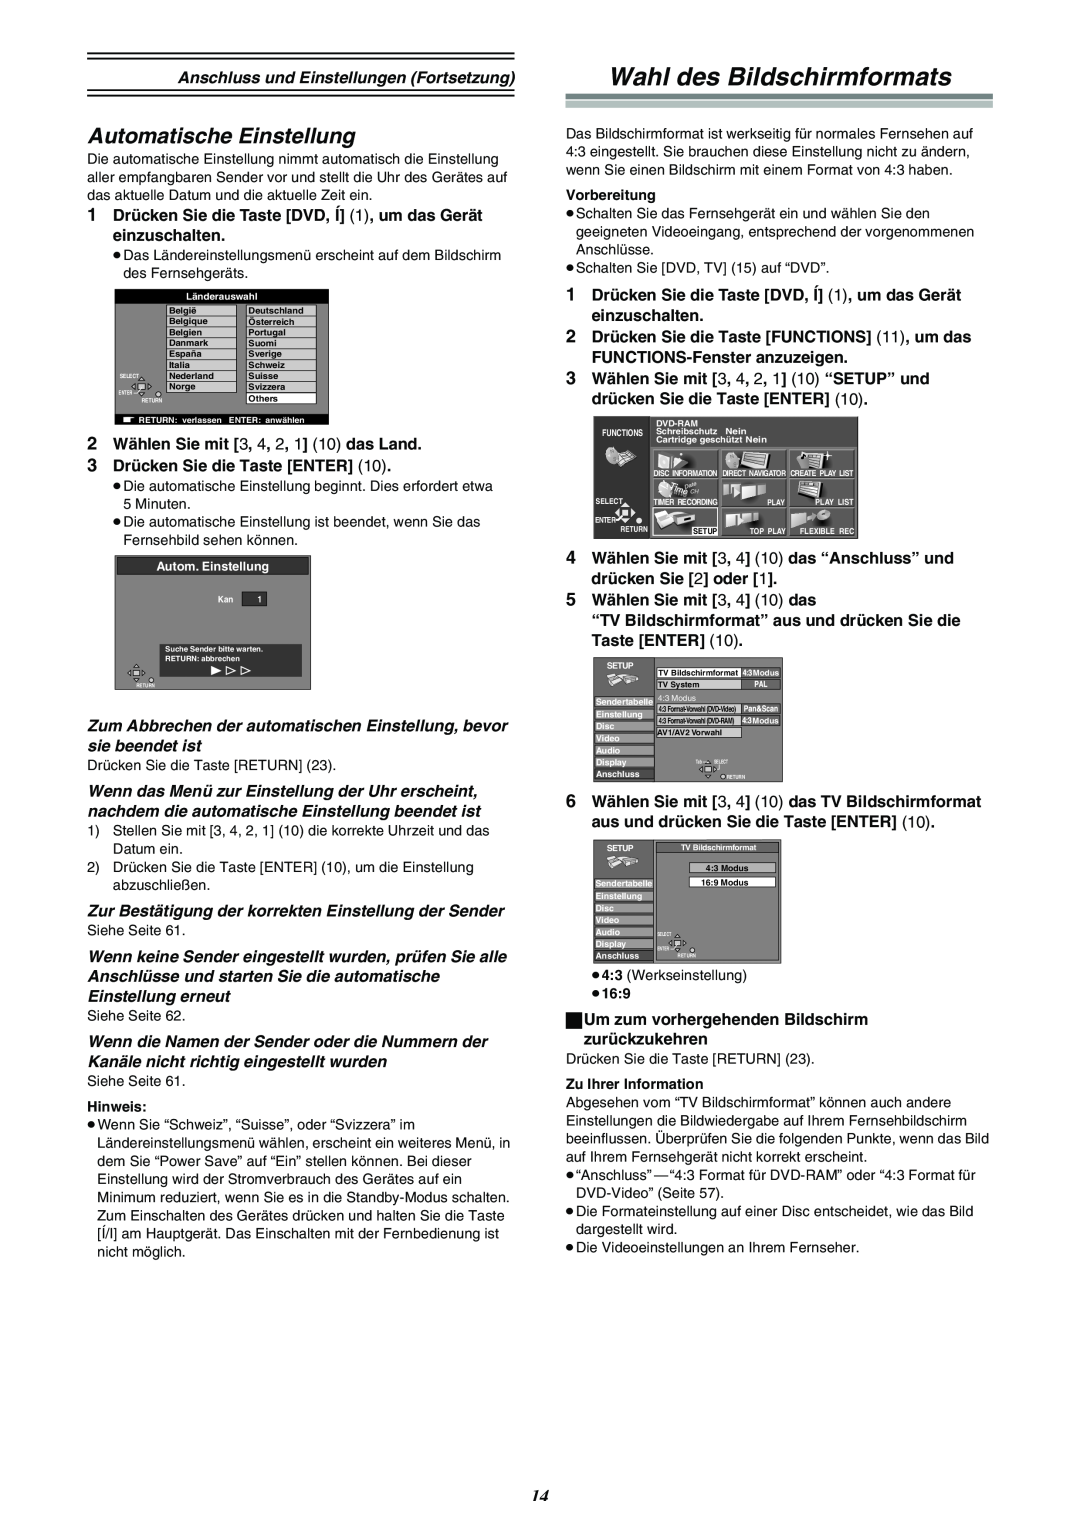 Panasonic DMR-E30 manual Wahl des Bildschirmformats, Automatische Einstellung 